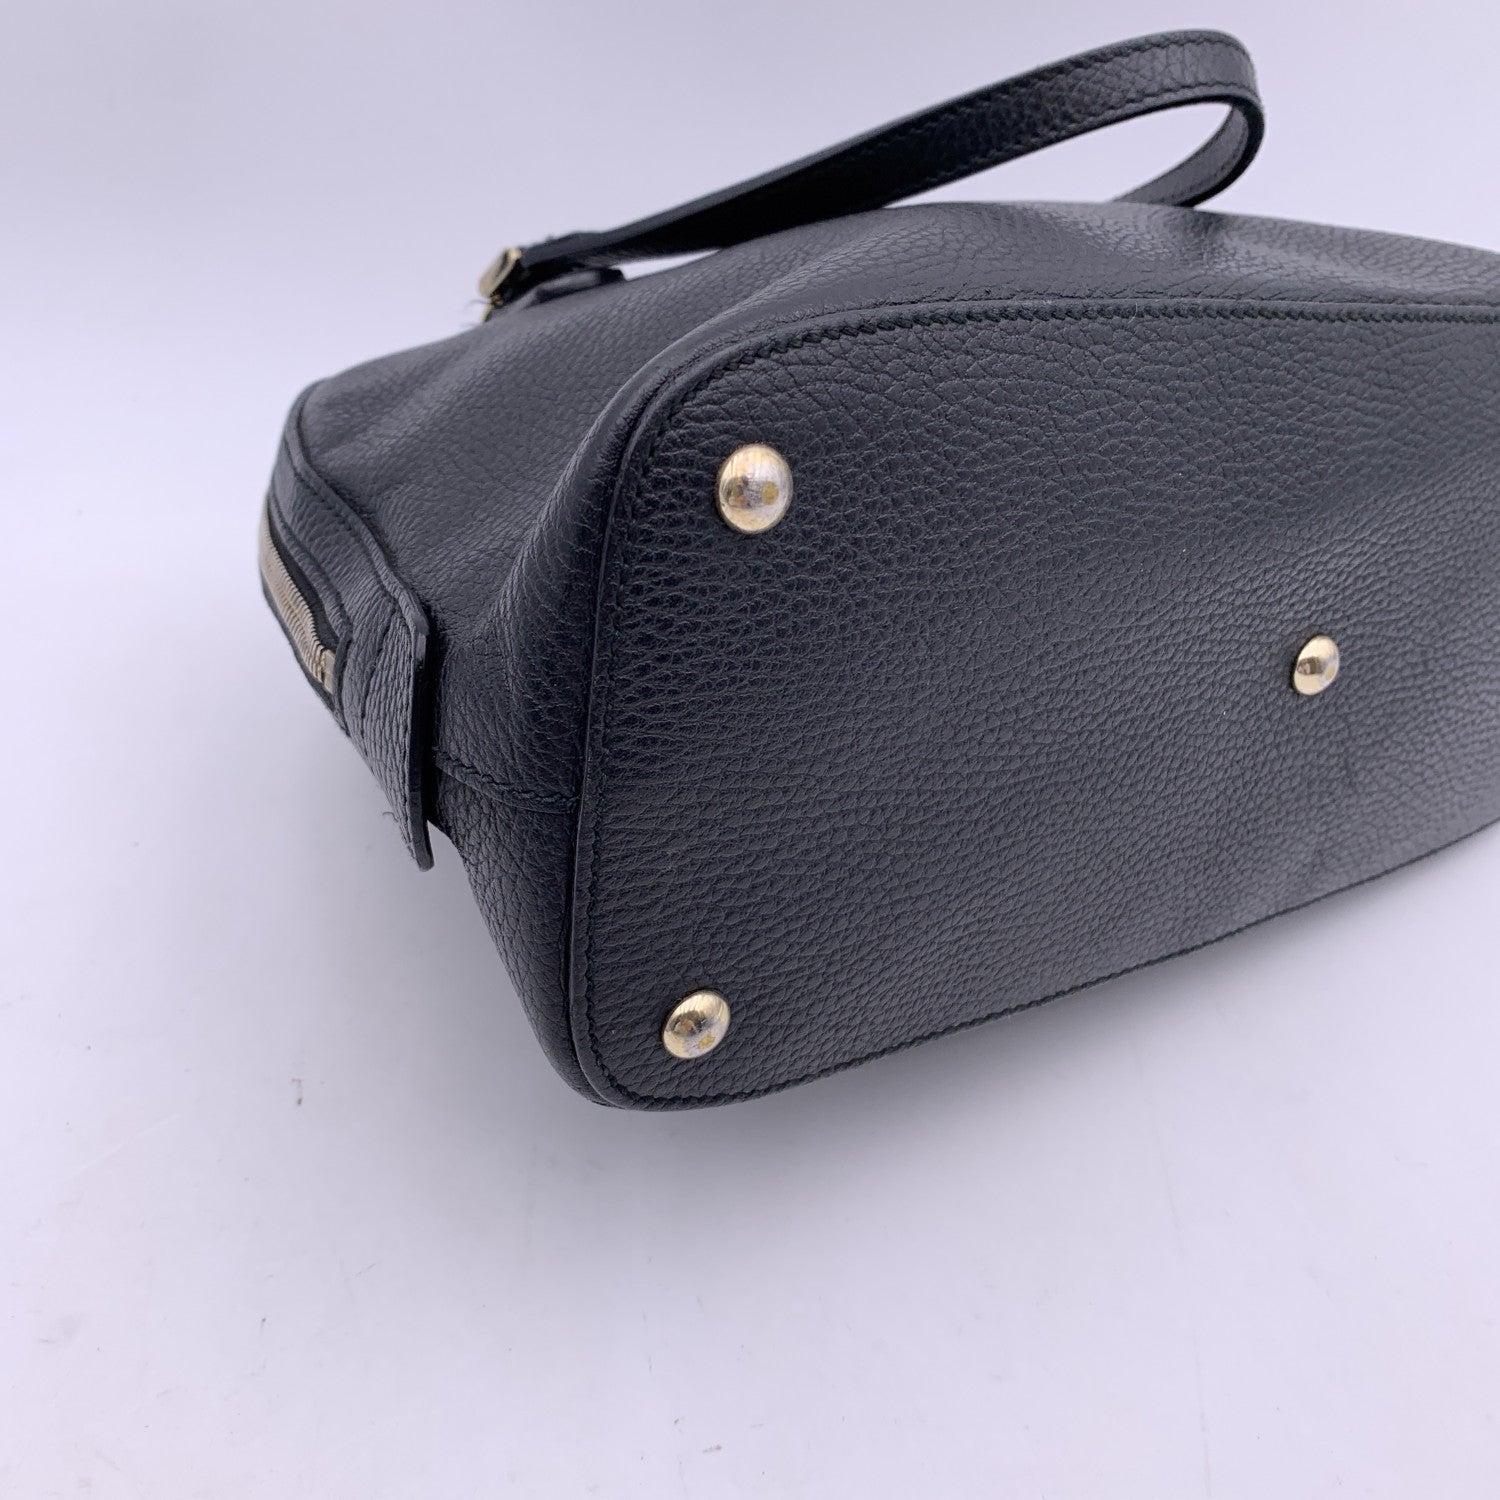 Gucci Black Leather Lady Dollar Dome Satchel Bag Handbag 3